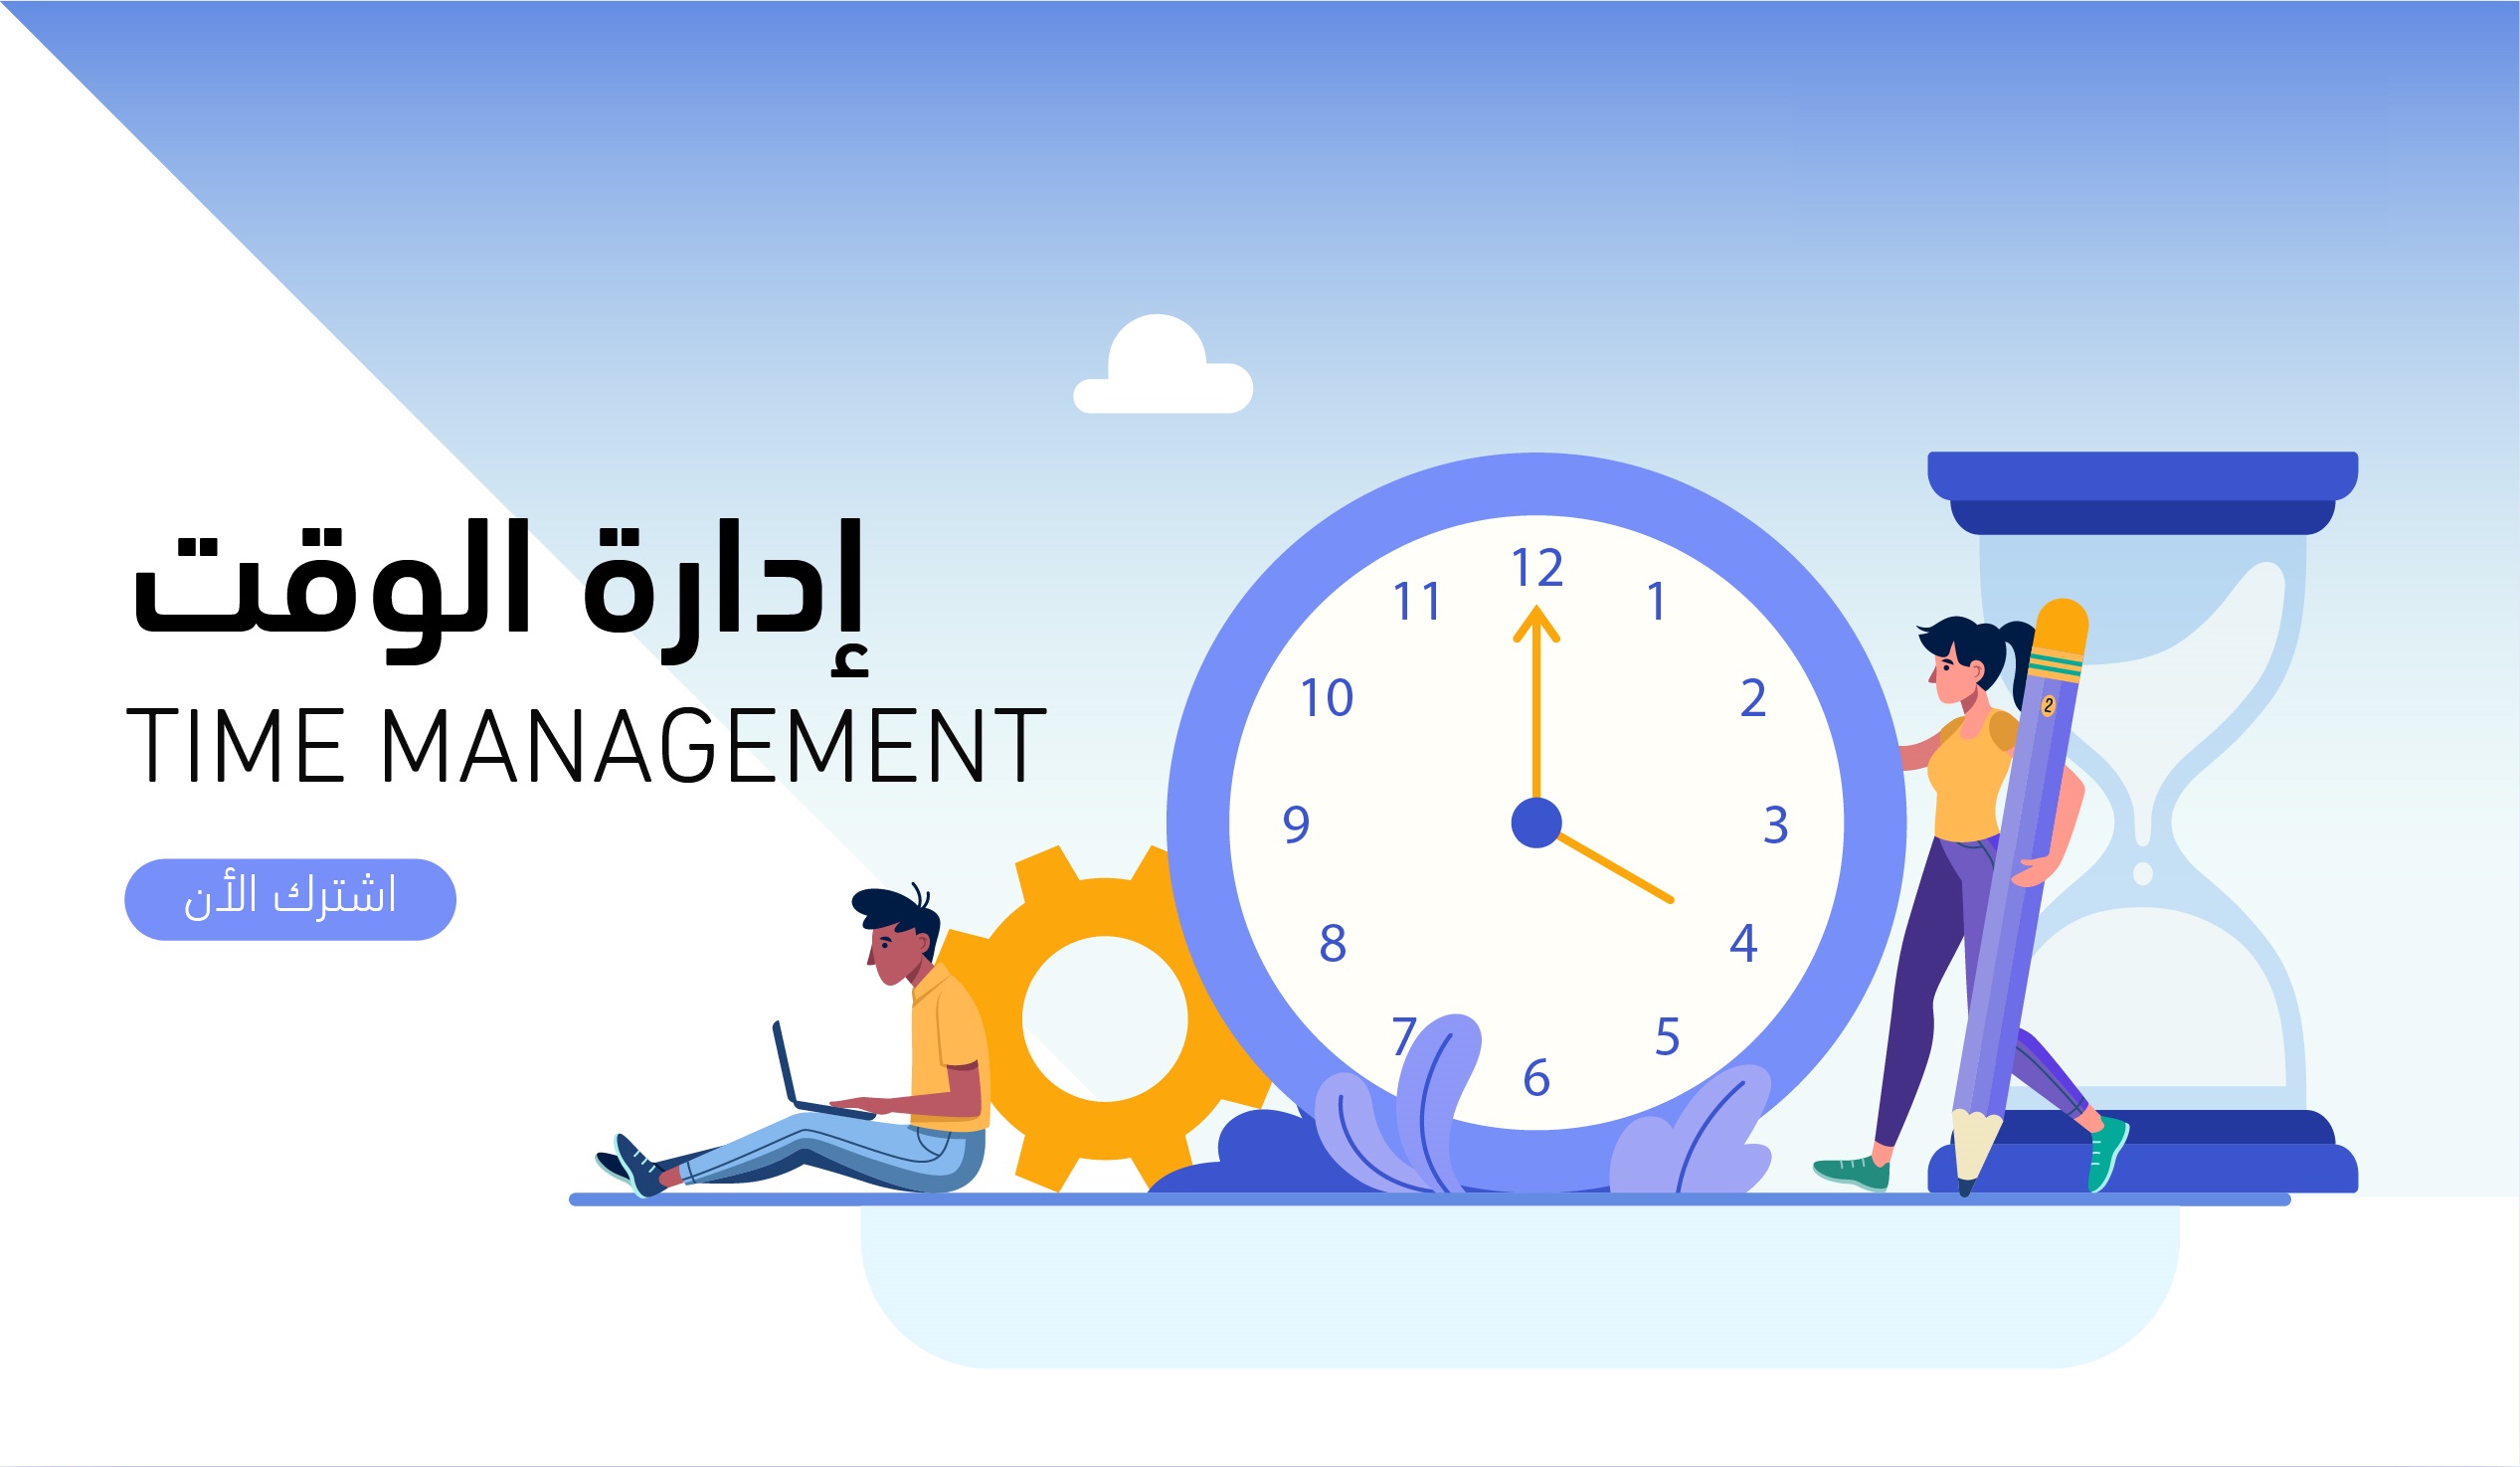 Time management Time management